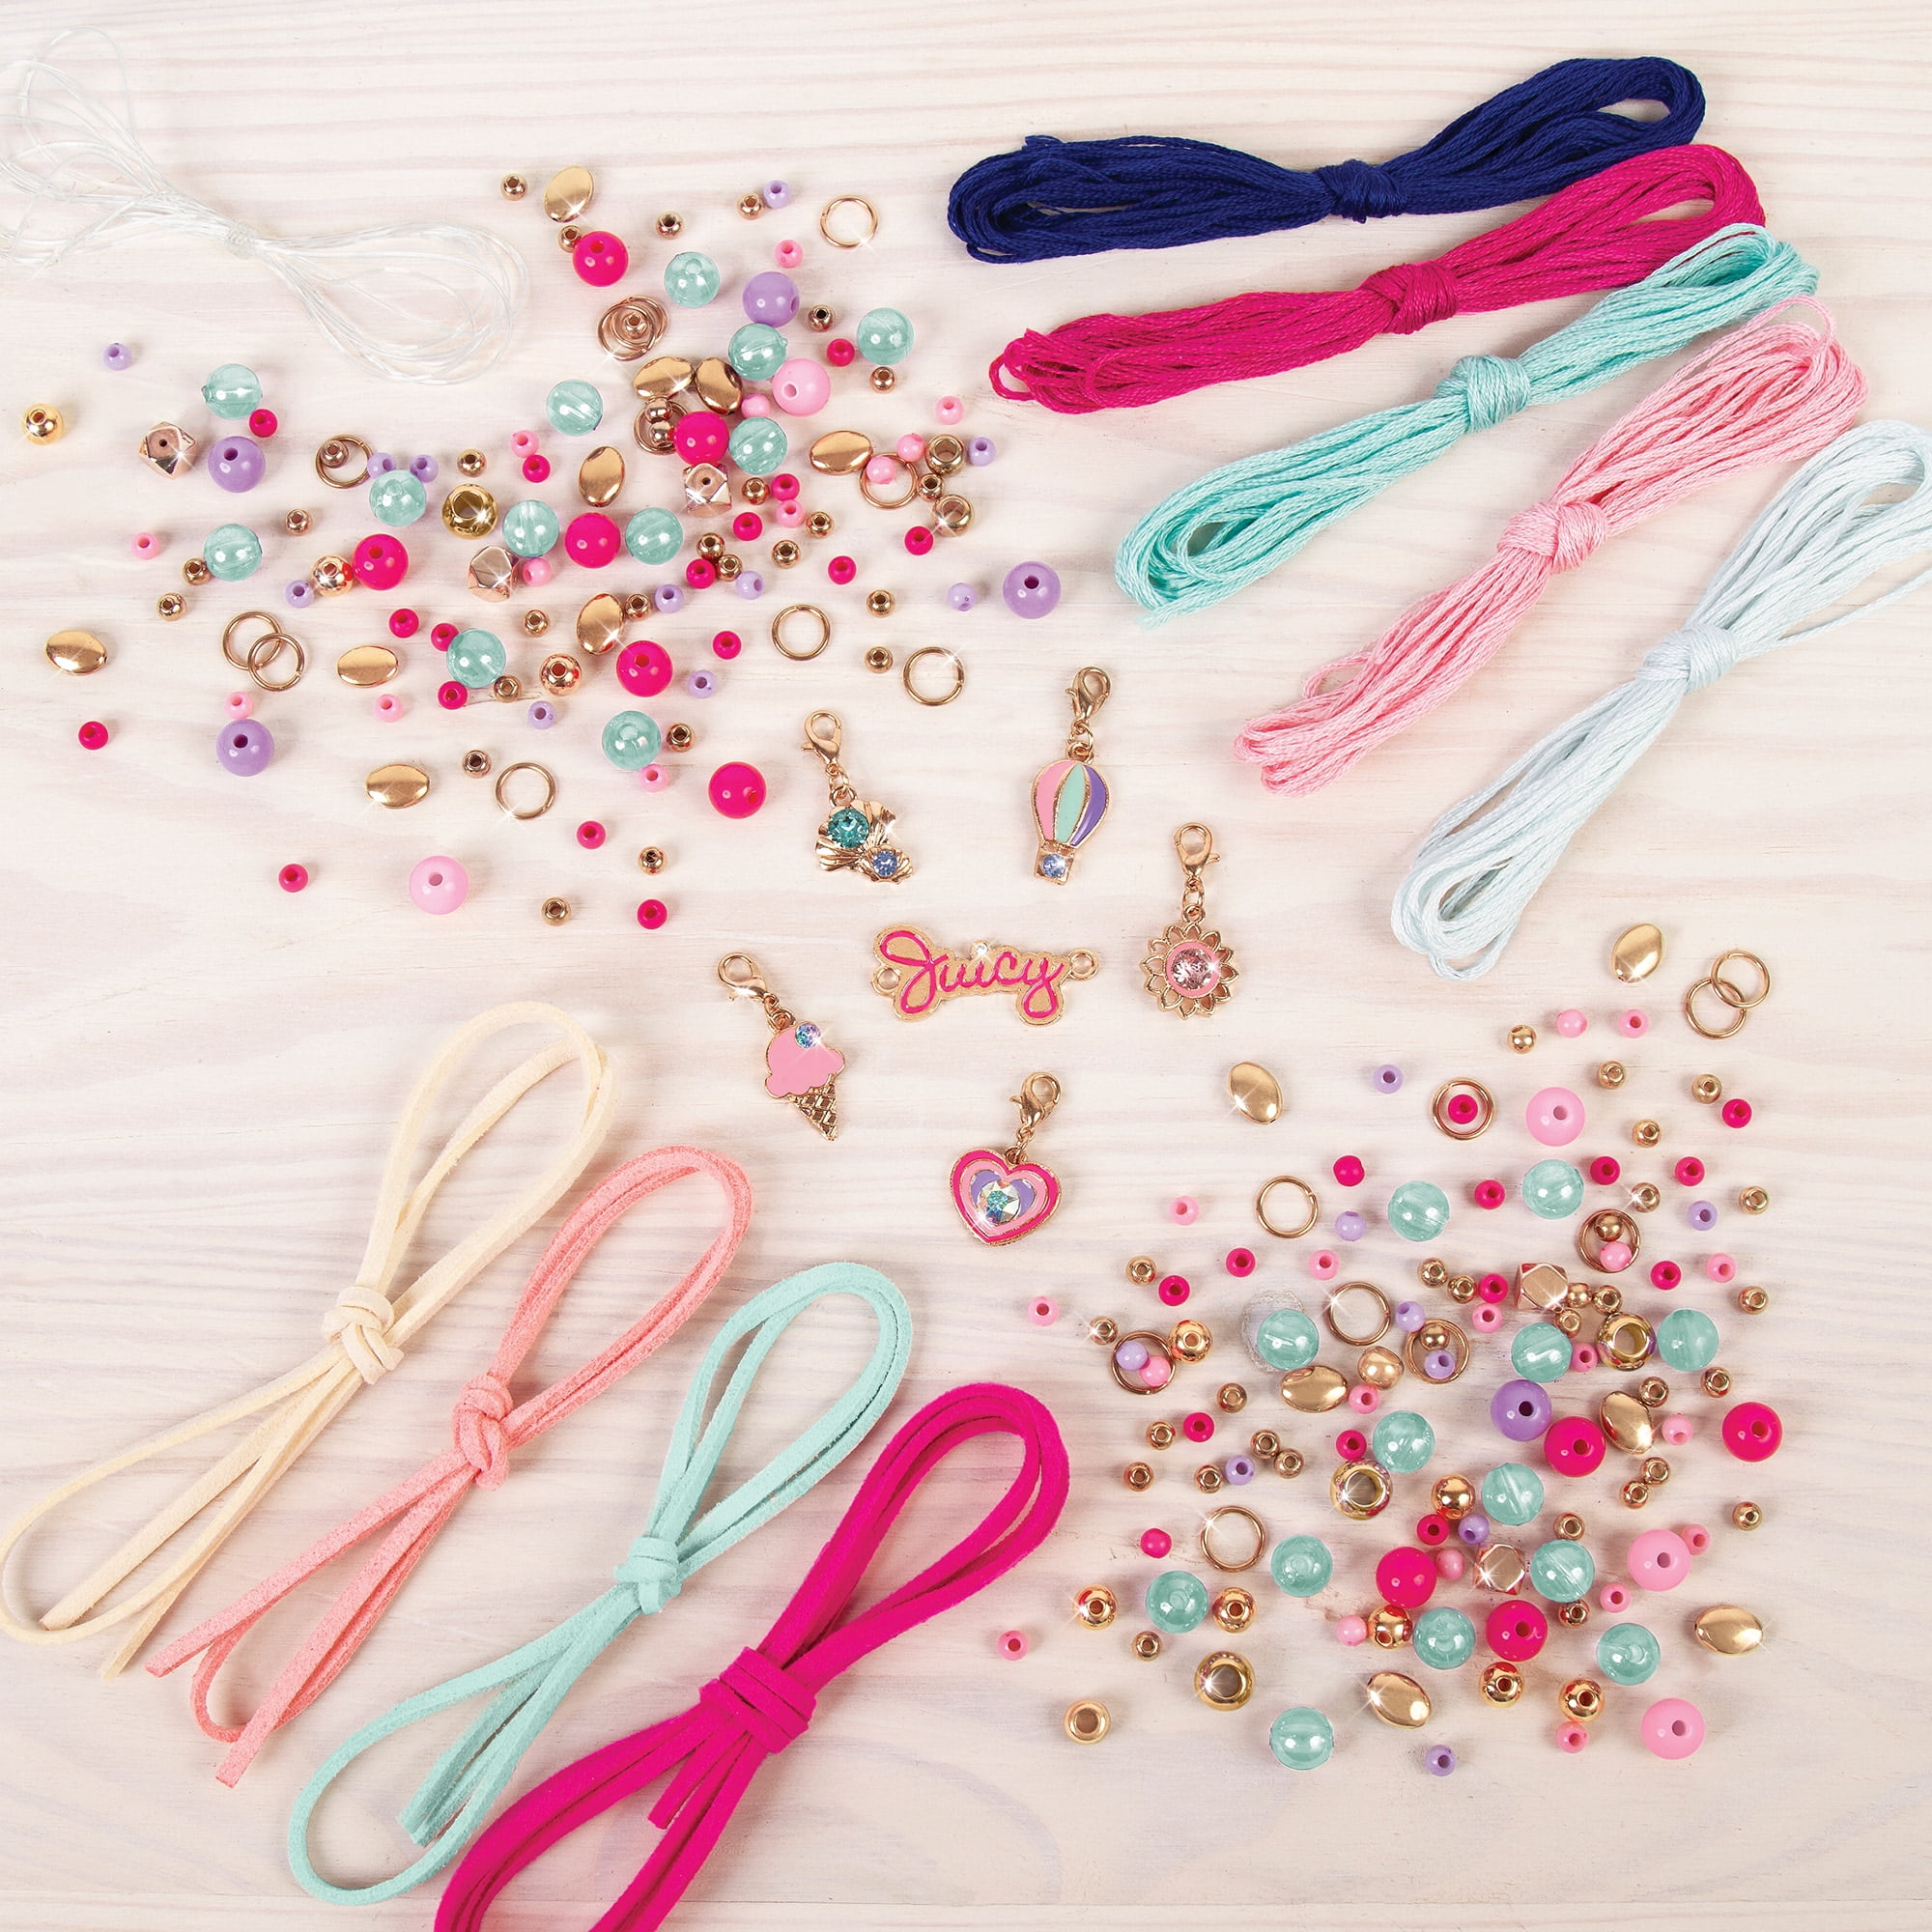 Make It Real – Juicy Couture Fruit Obsessions Bracelets. DIY Bracelet  Making Kit for Girls. Design and Create Girls Bracelets with Juicy Couture  Charms, Beads, …